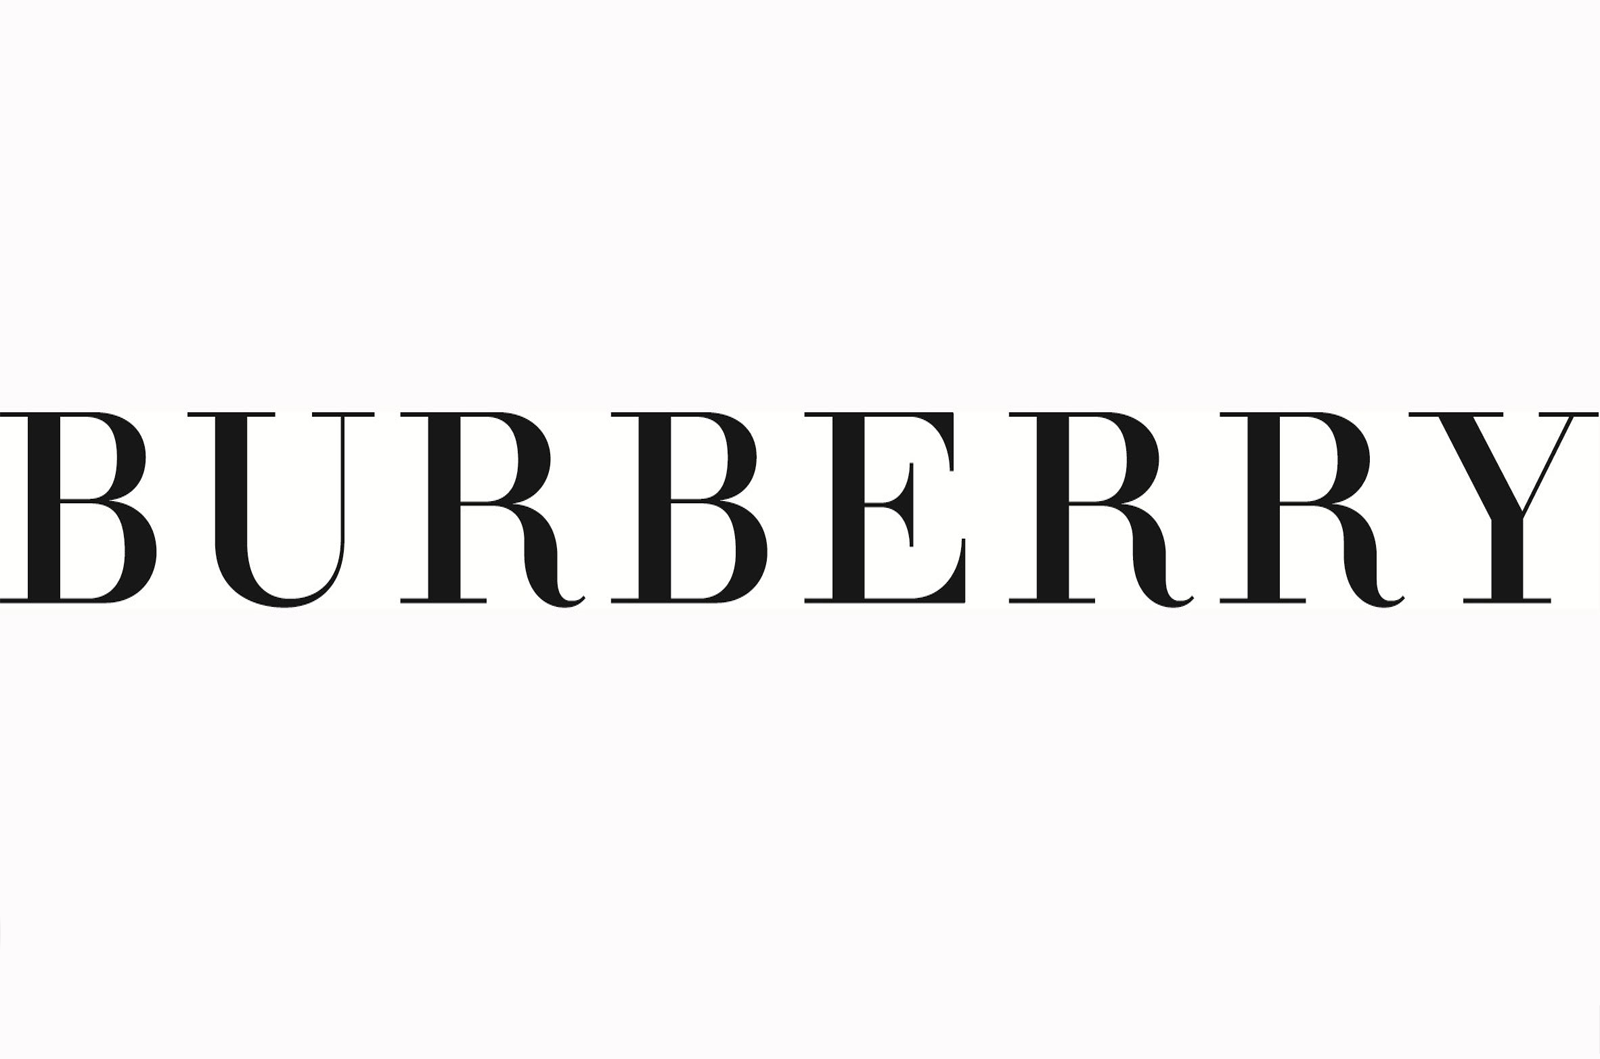 Burberry logo vector - Burber